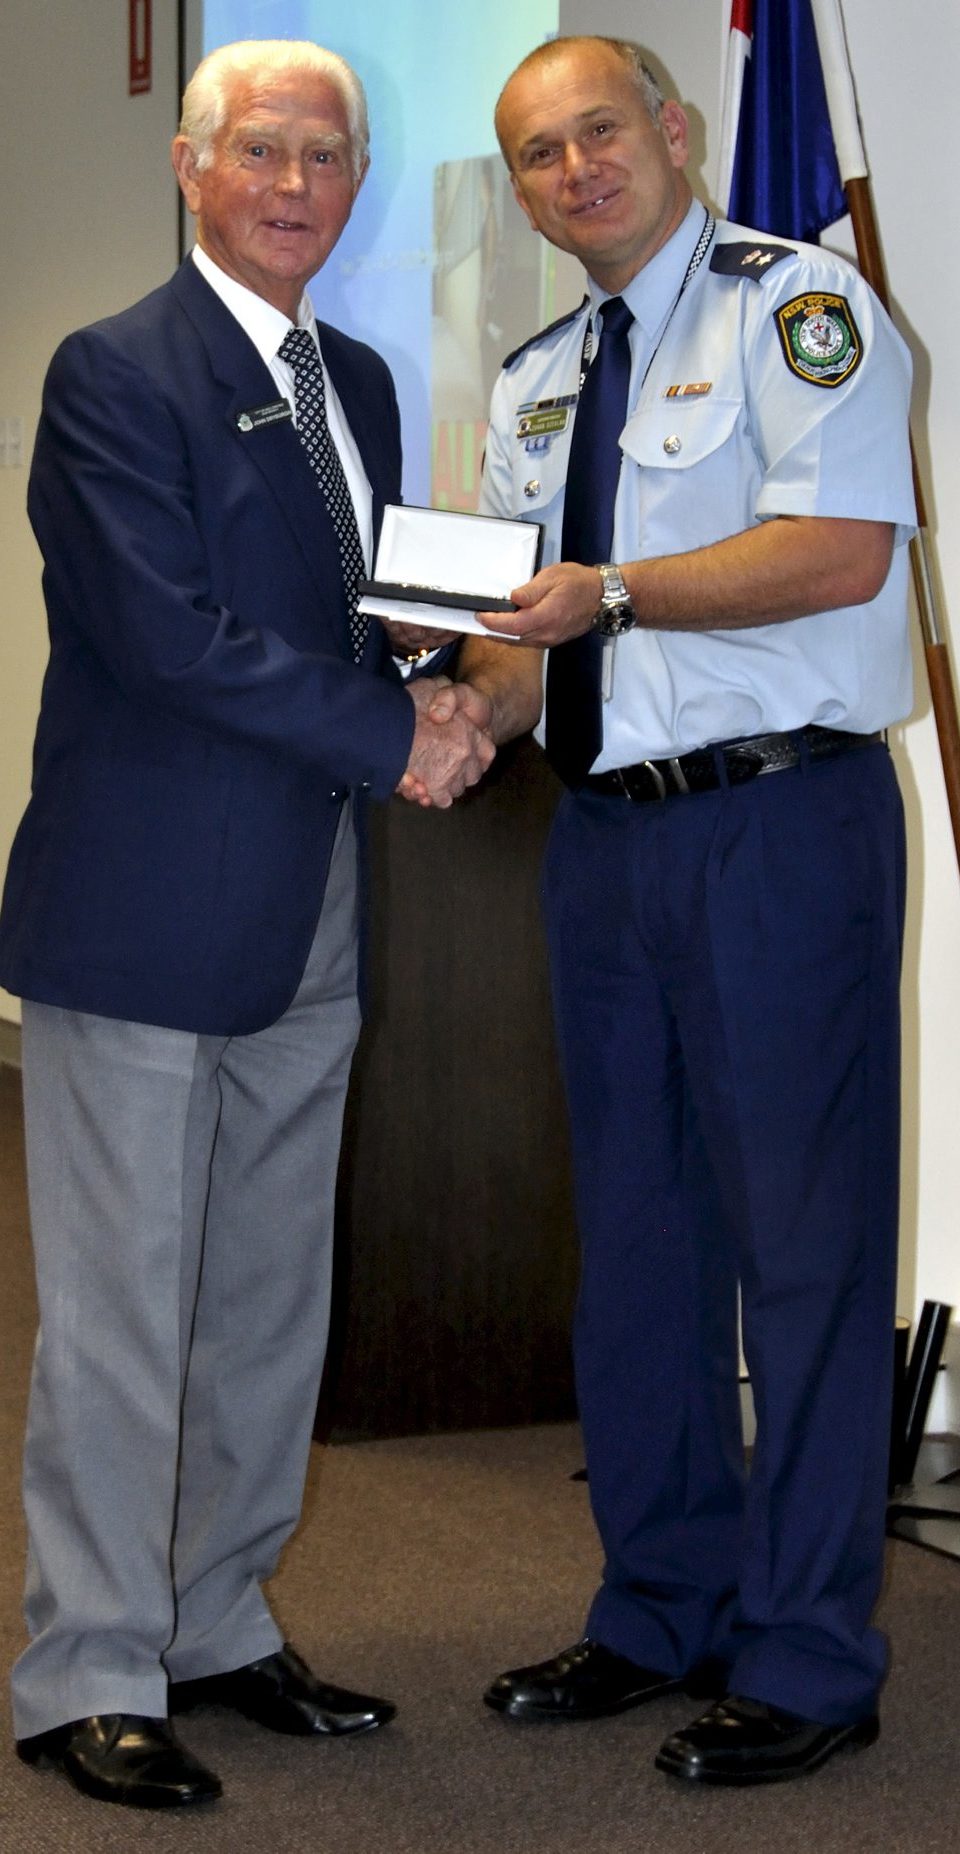 John DRYBURGH receiving his Medal.